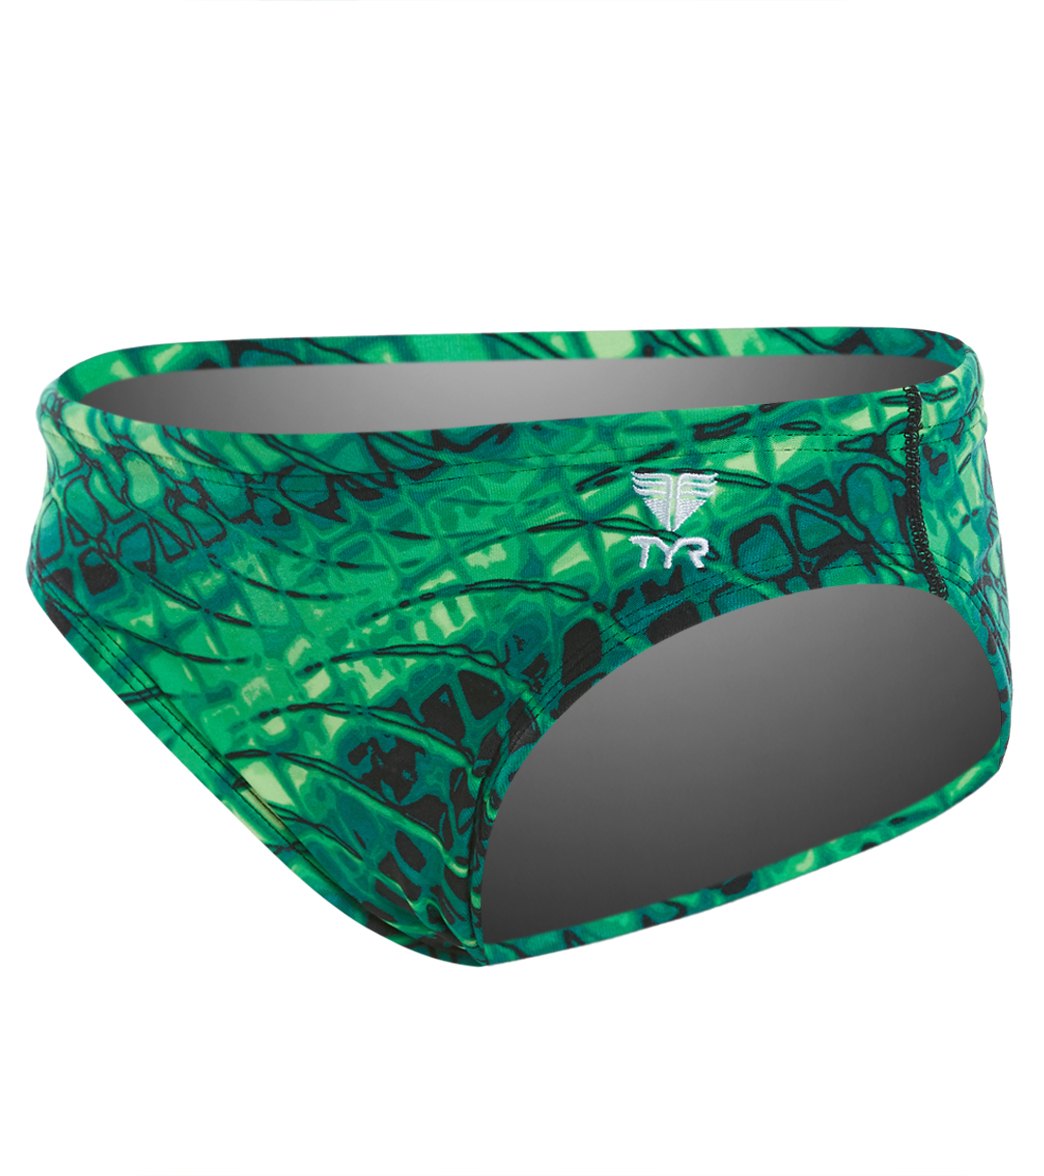 TYR Boys' Plexus Allover Racer Brief Swimsuit - Green 22 Polyester/Spandex - Swimoutlet.com